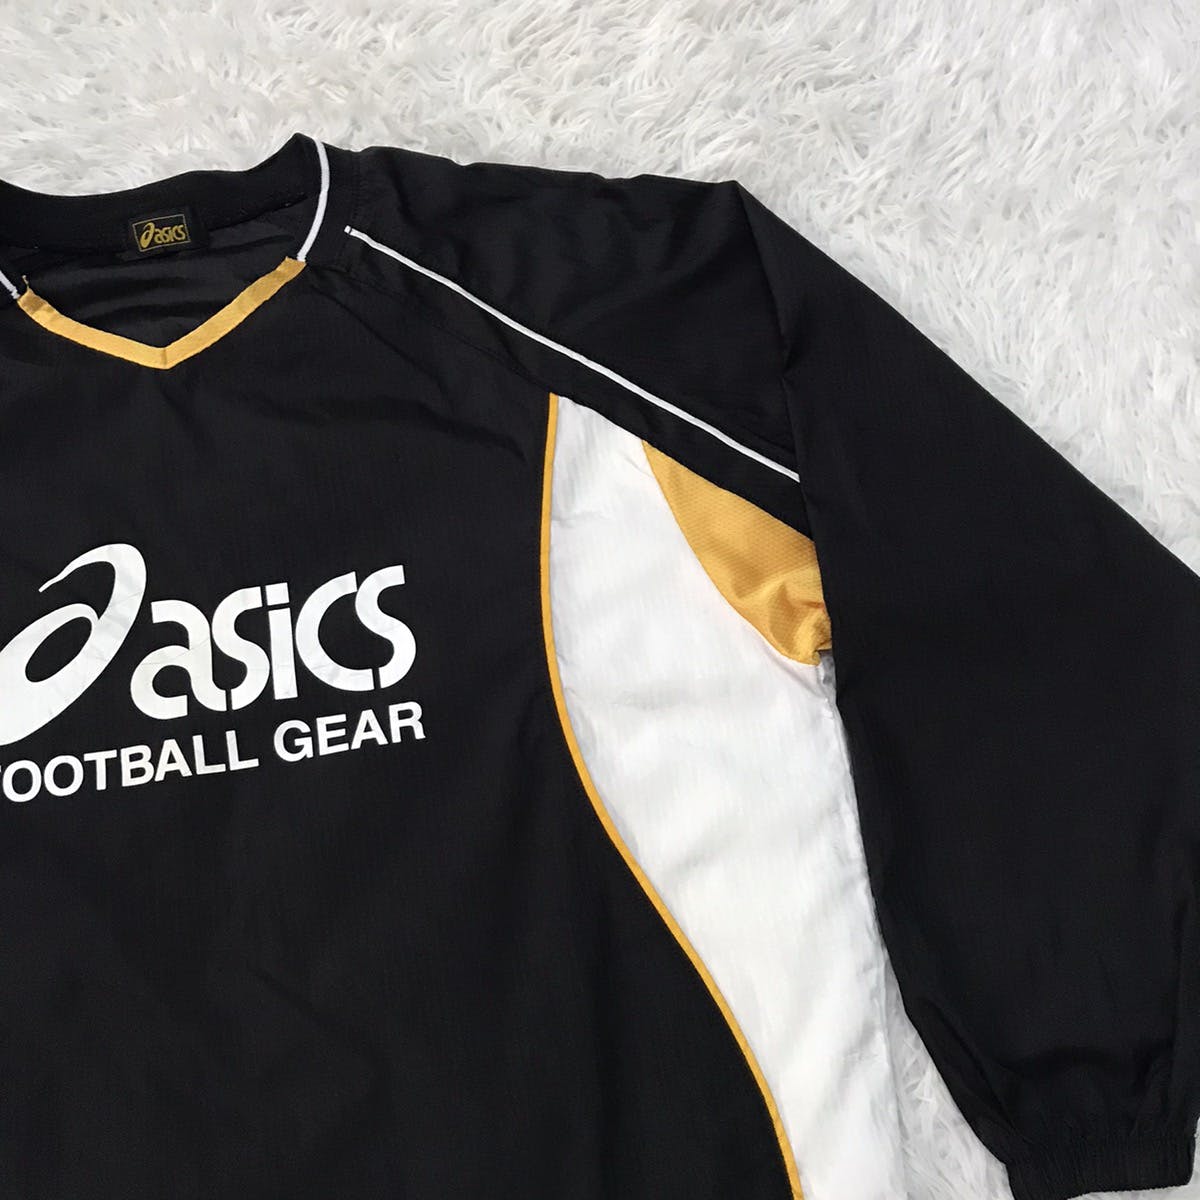 Asics football gear long sleeves - 5